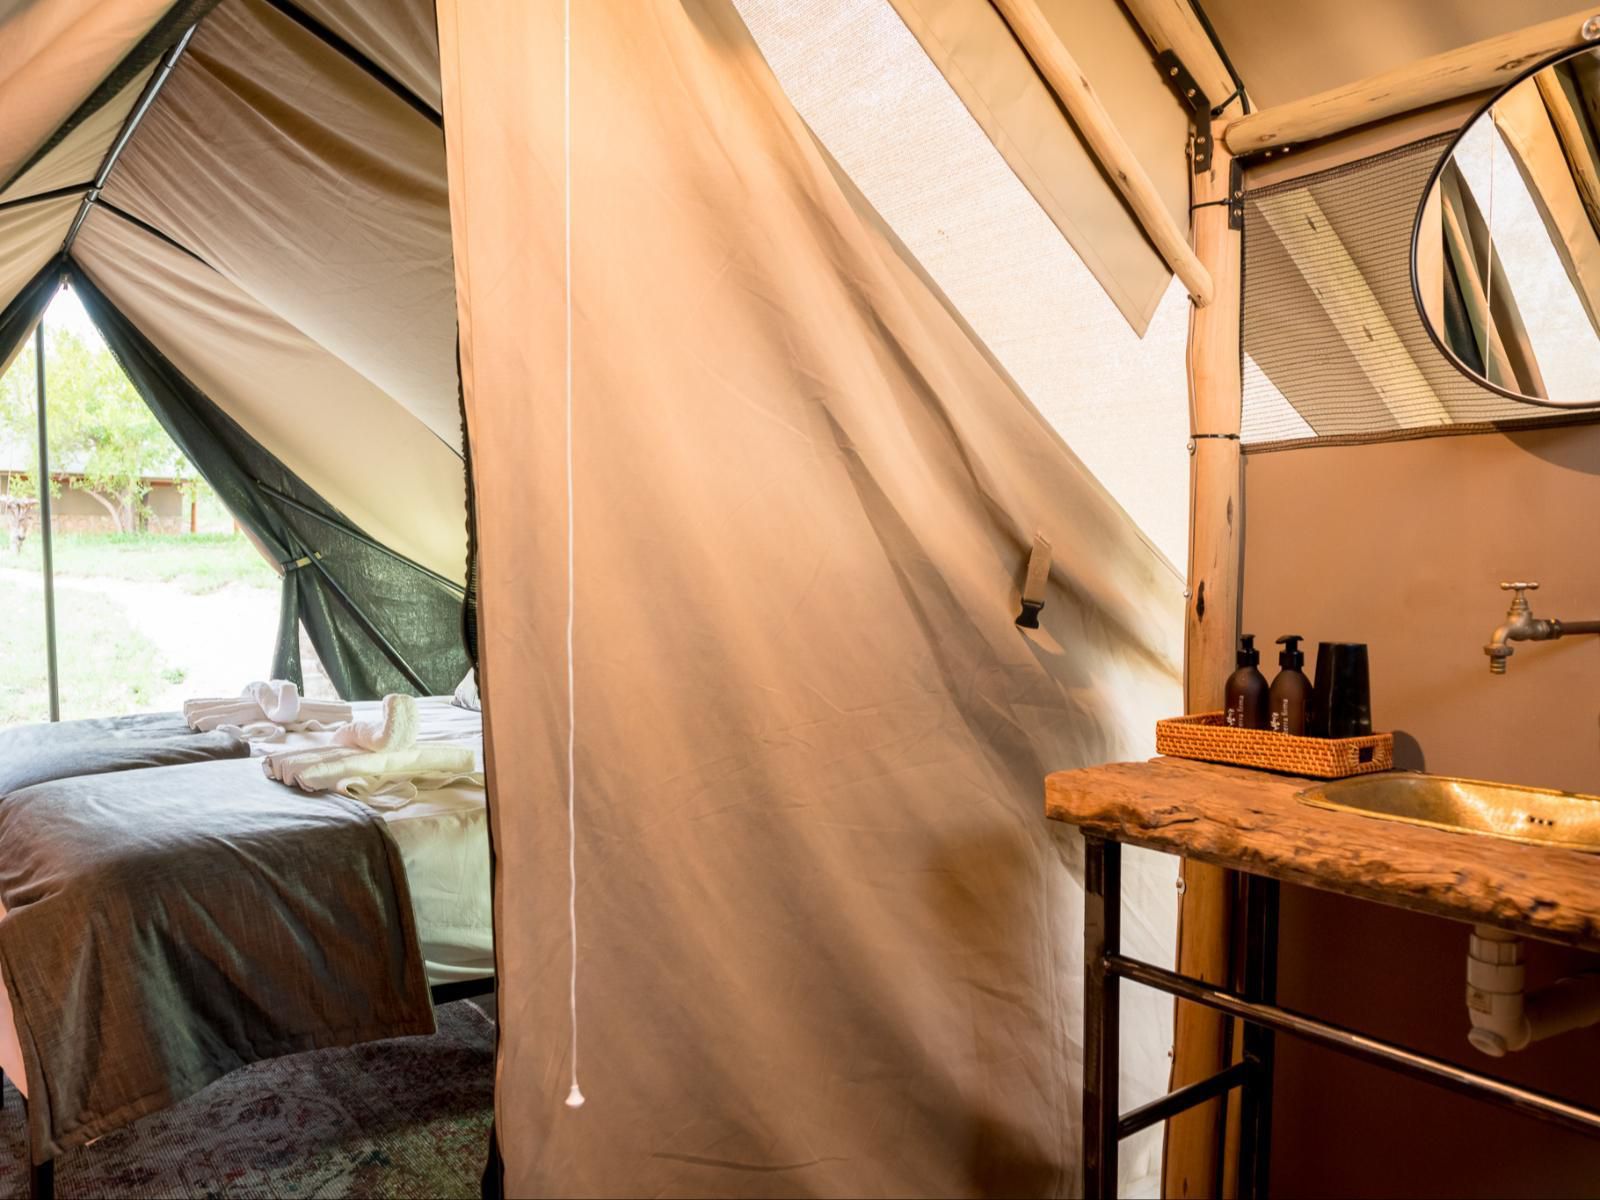 Bundox Explorer Camp Olifants Mpumalanga South Africa Tent, Architecture